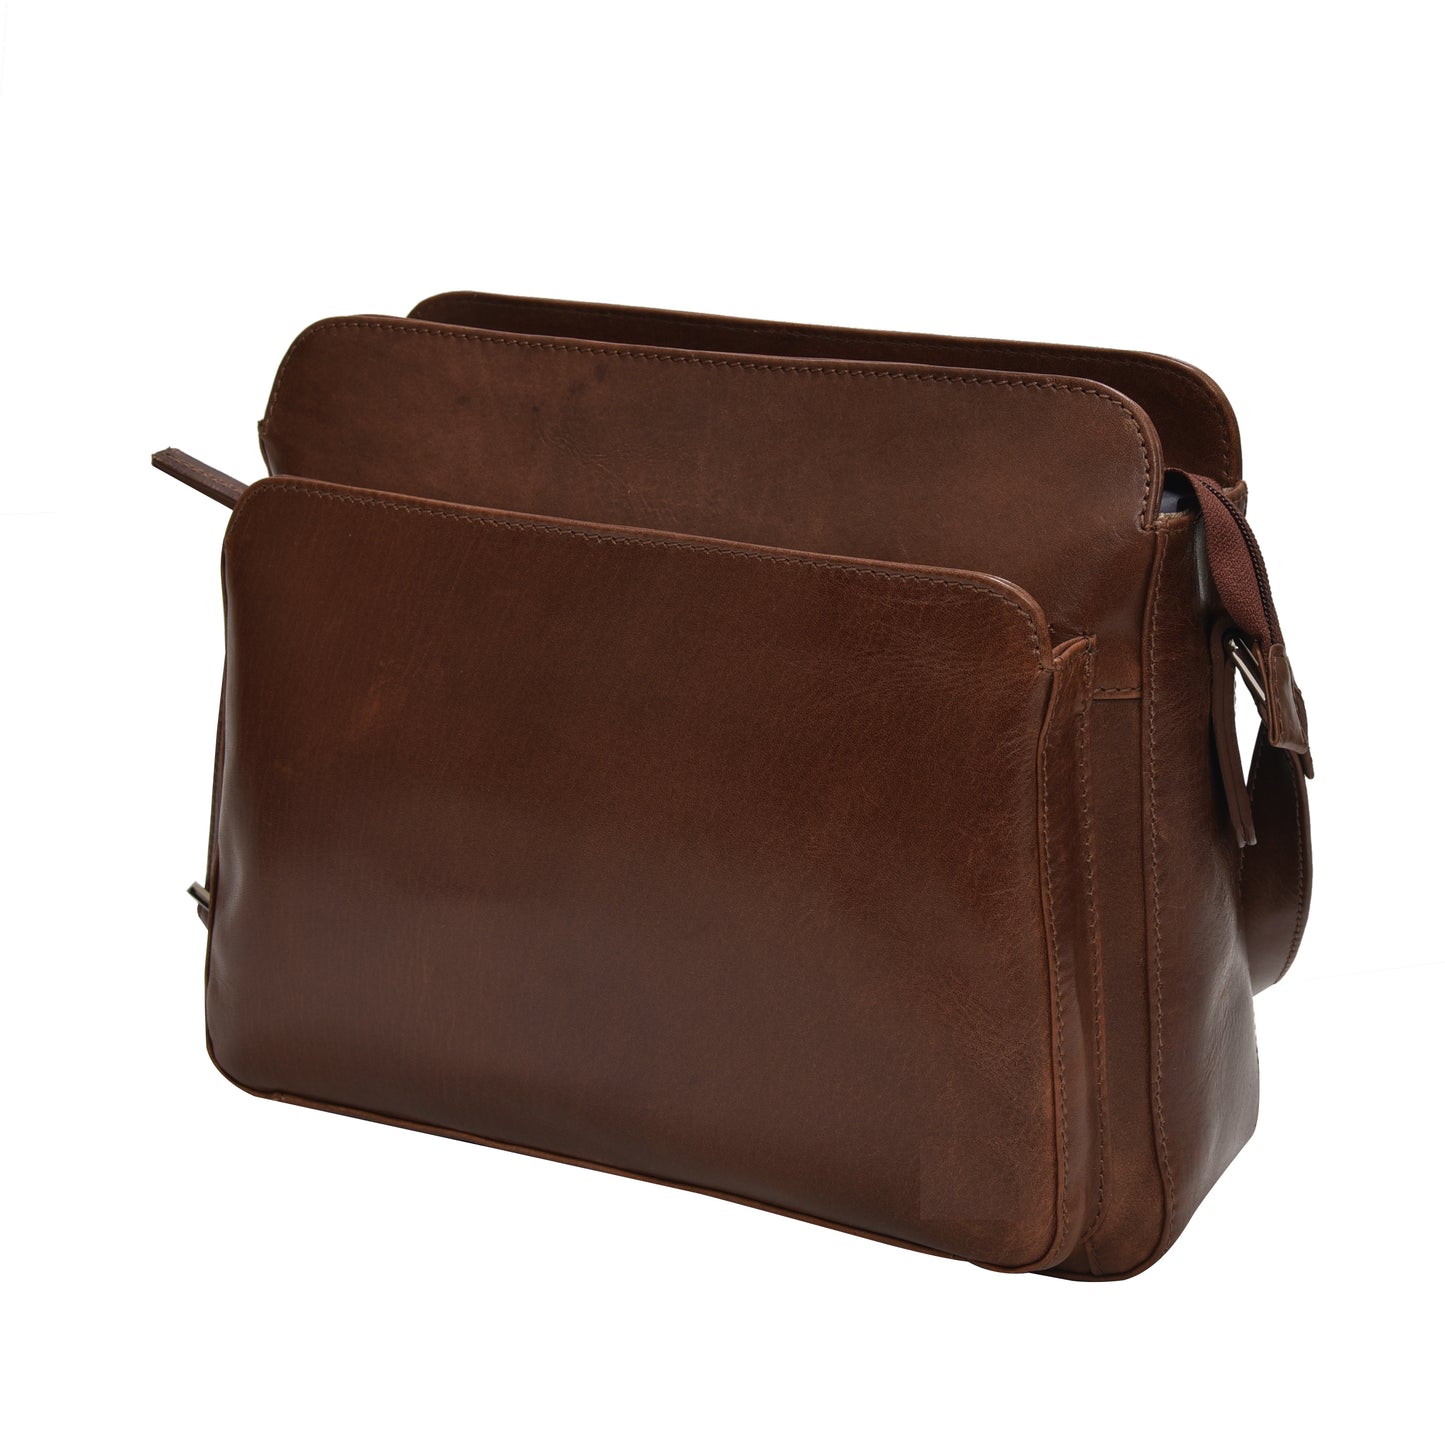 GT-H84: G&T Full-grain Leather Large Multi-Compartment Handbag with Long Adjustable Shoulder Strap